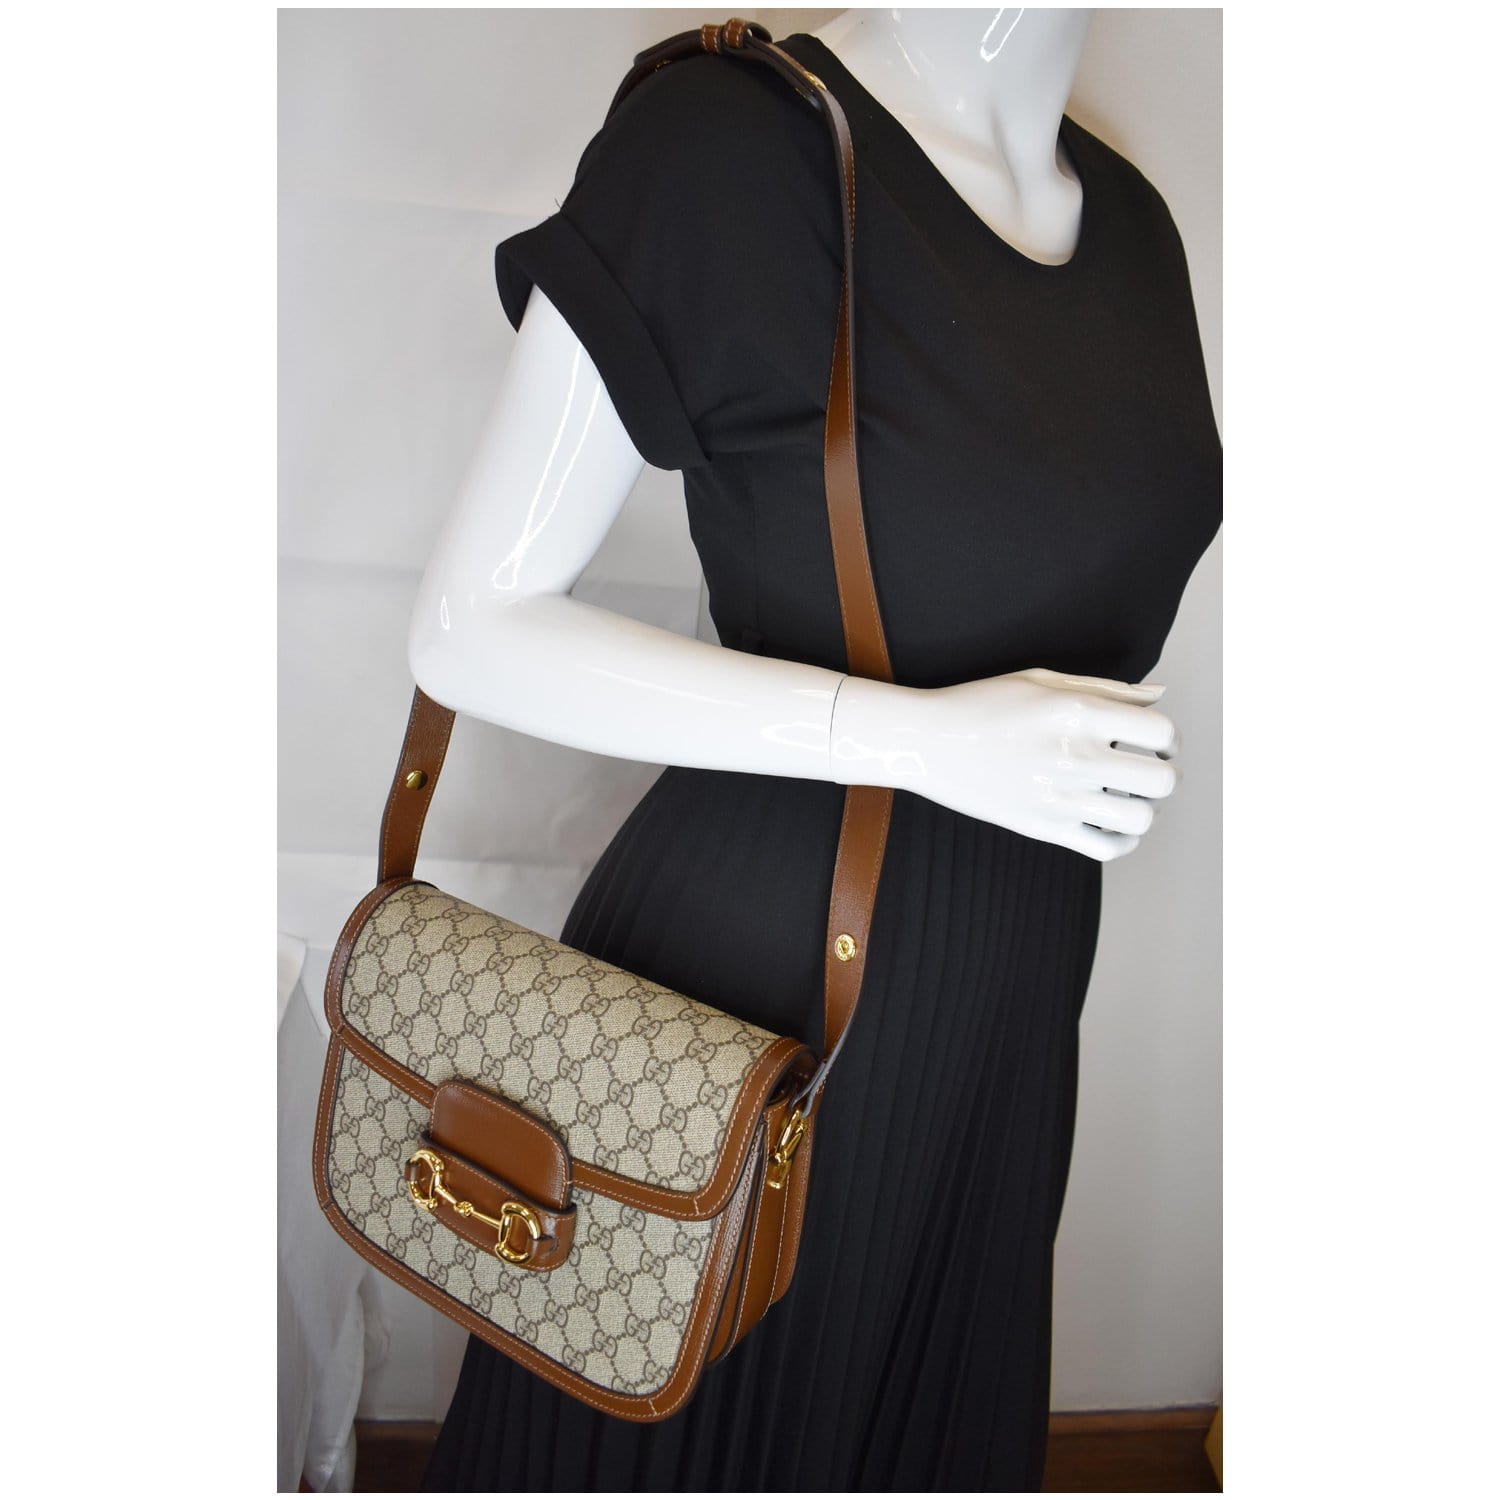 Gucci Horsebit 1955 small shoulder bag in beige and ebony Supreme